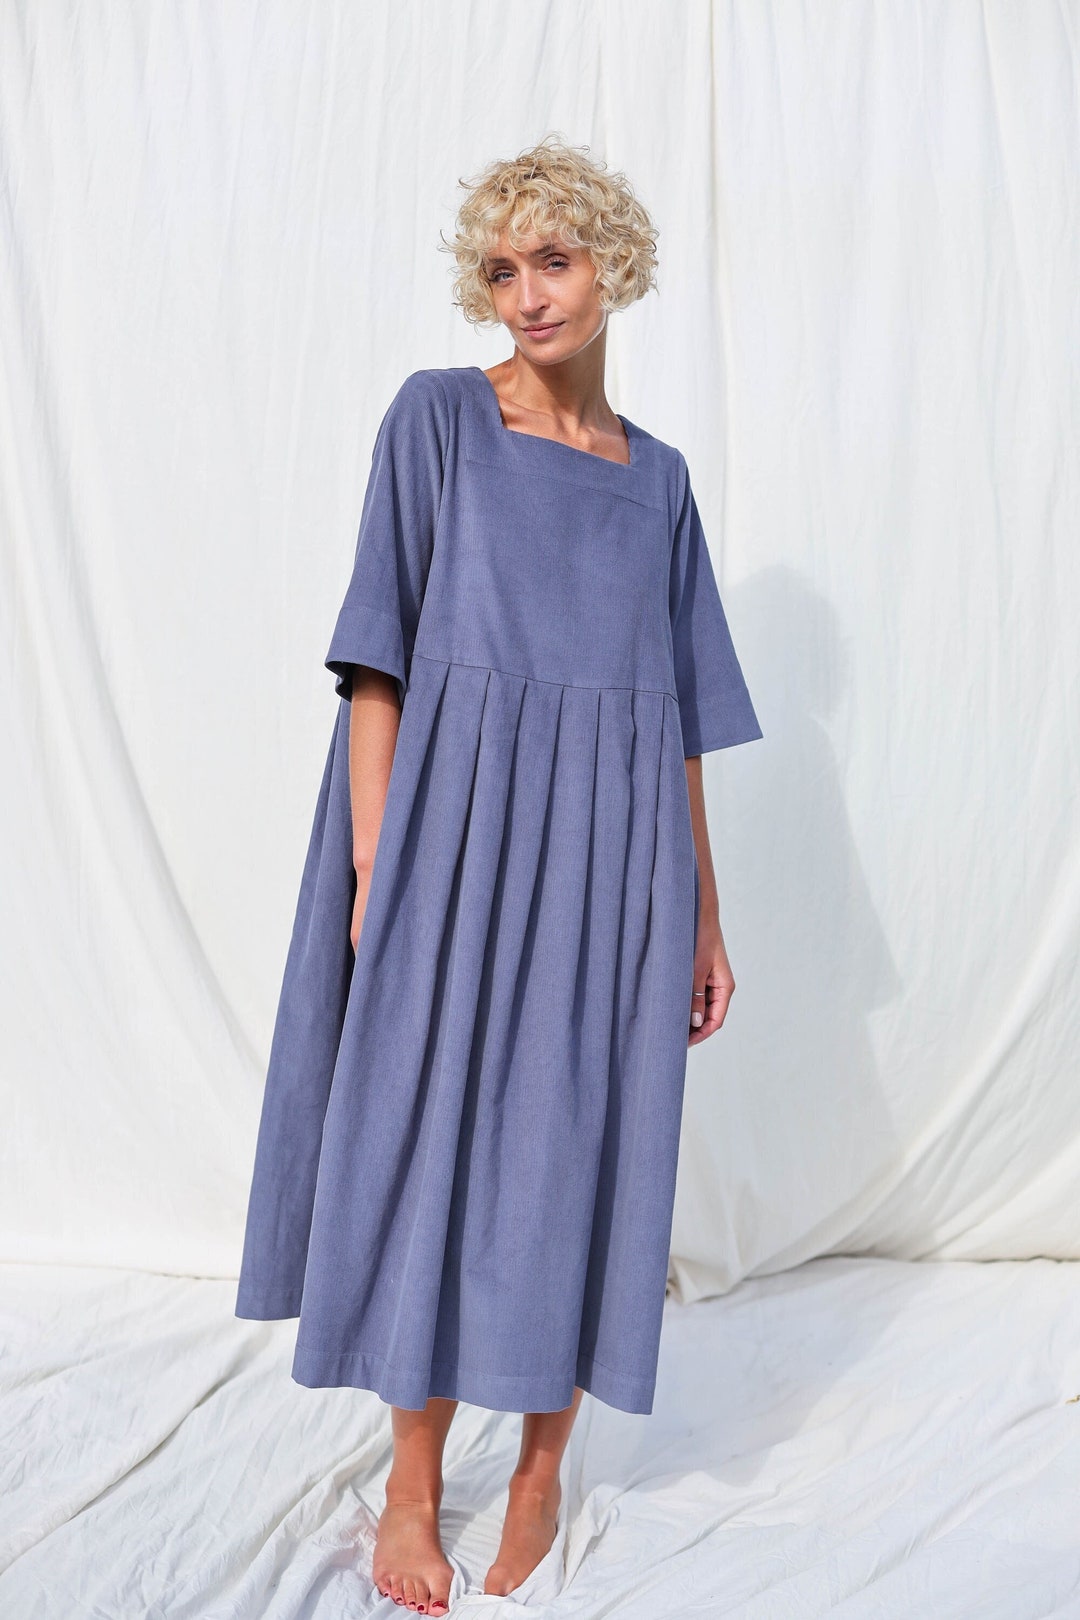 Oversized Square Neck Needlecord Dress VALERIE / Handmade by OFFON - Etsy